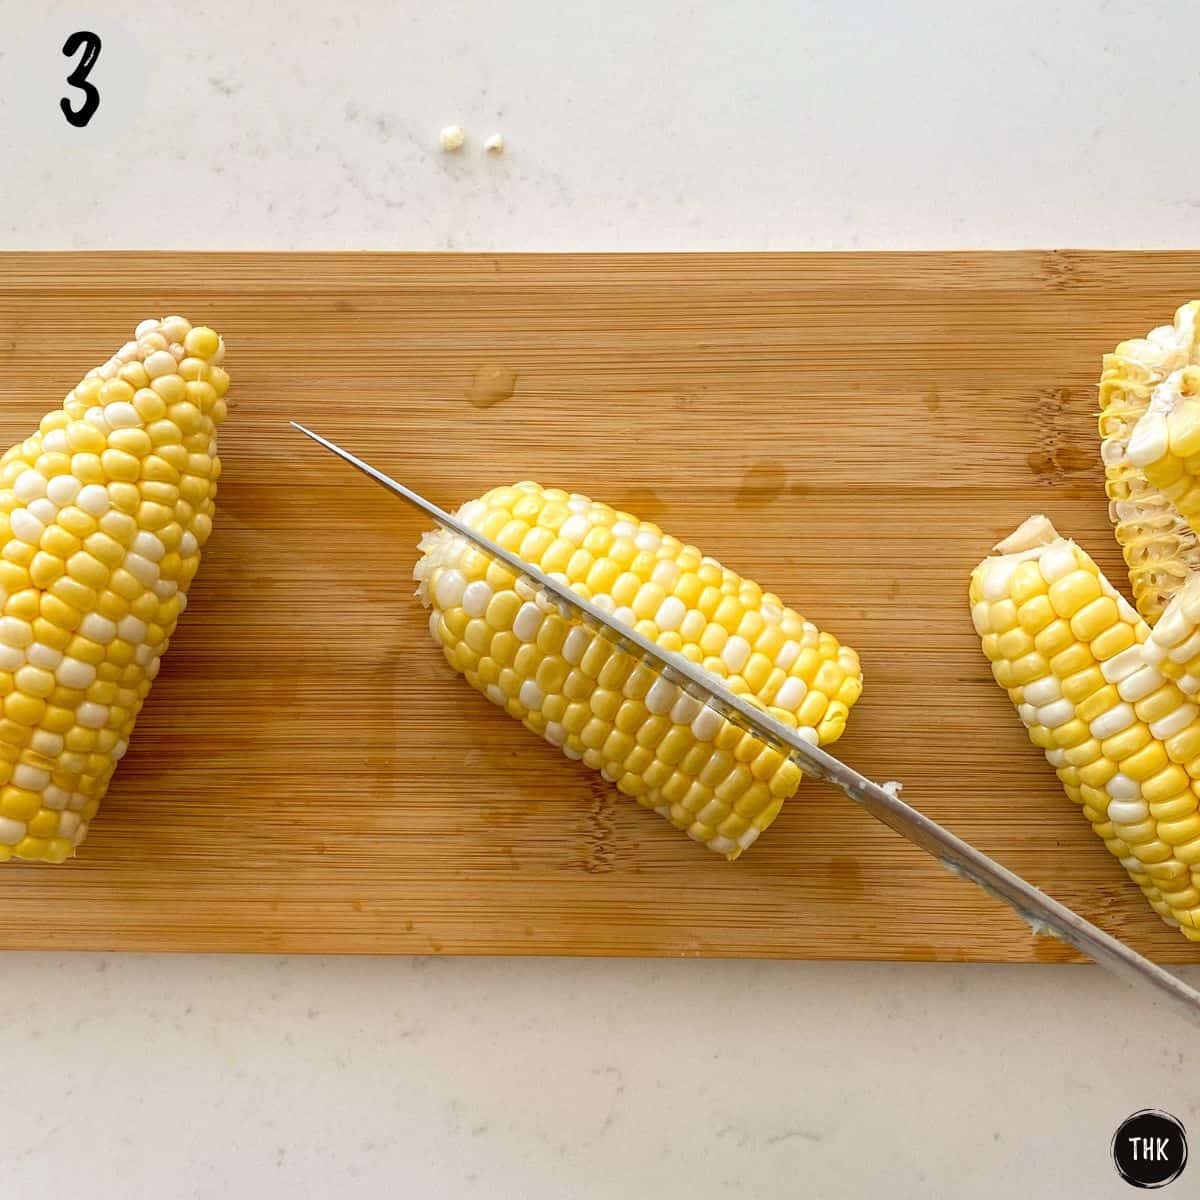 Knife cutting corn into corn quarters.